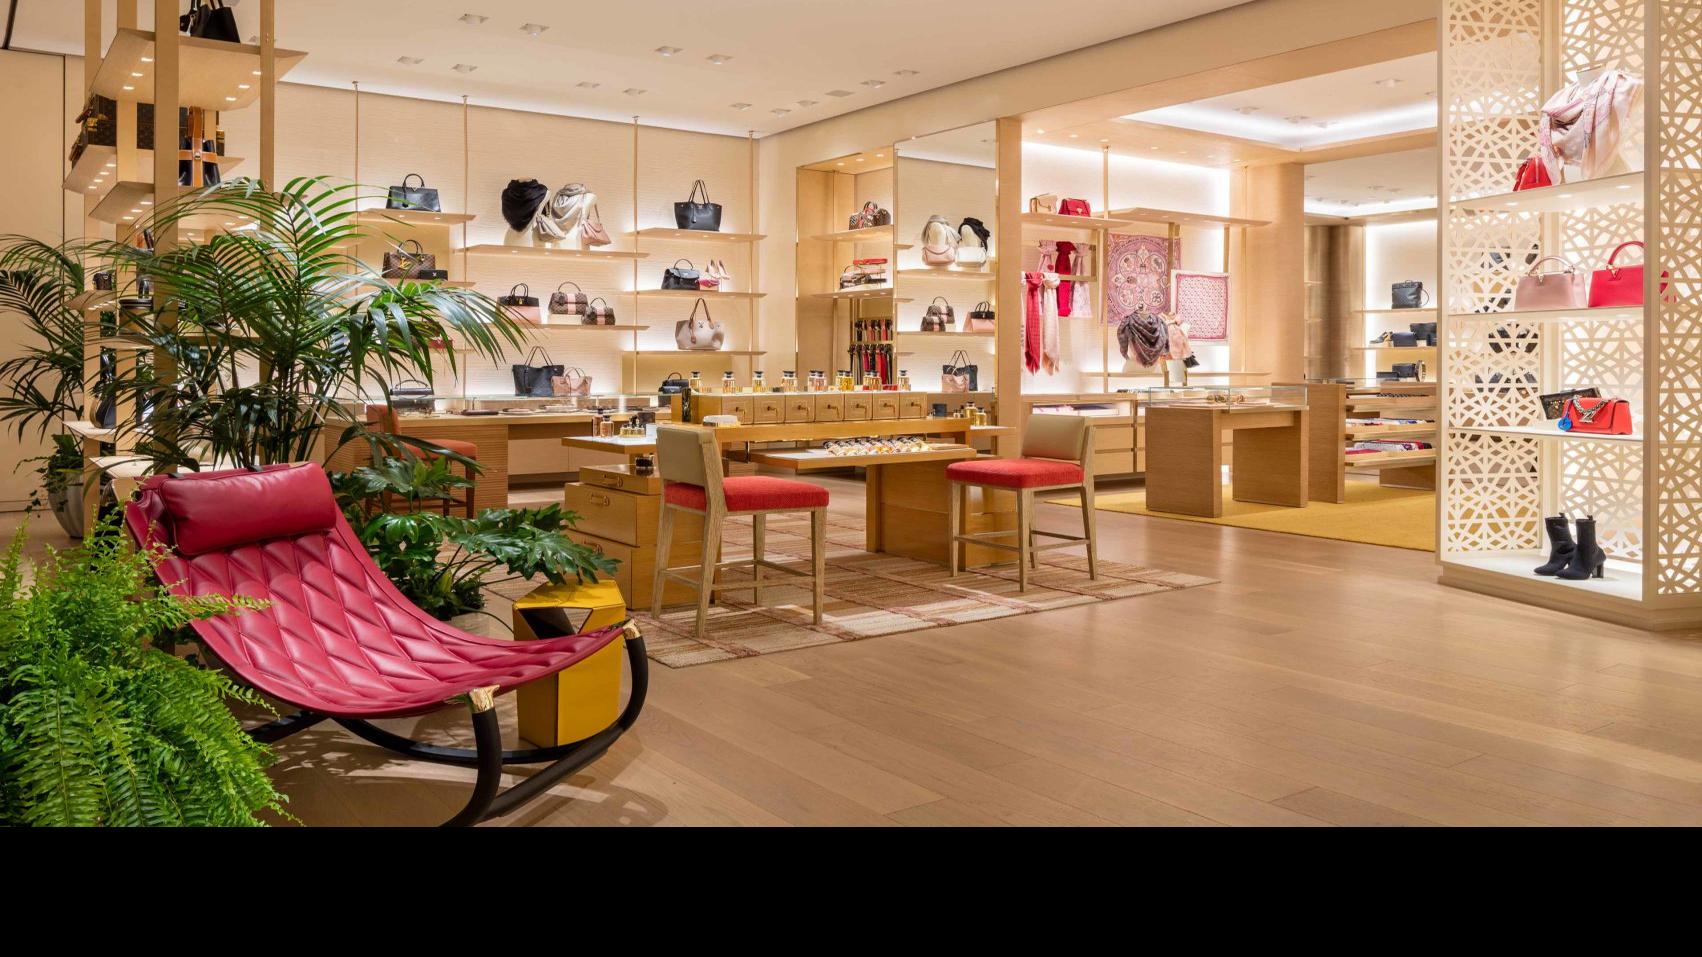 Louis Vuitton Garden State Mall